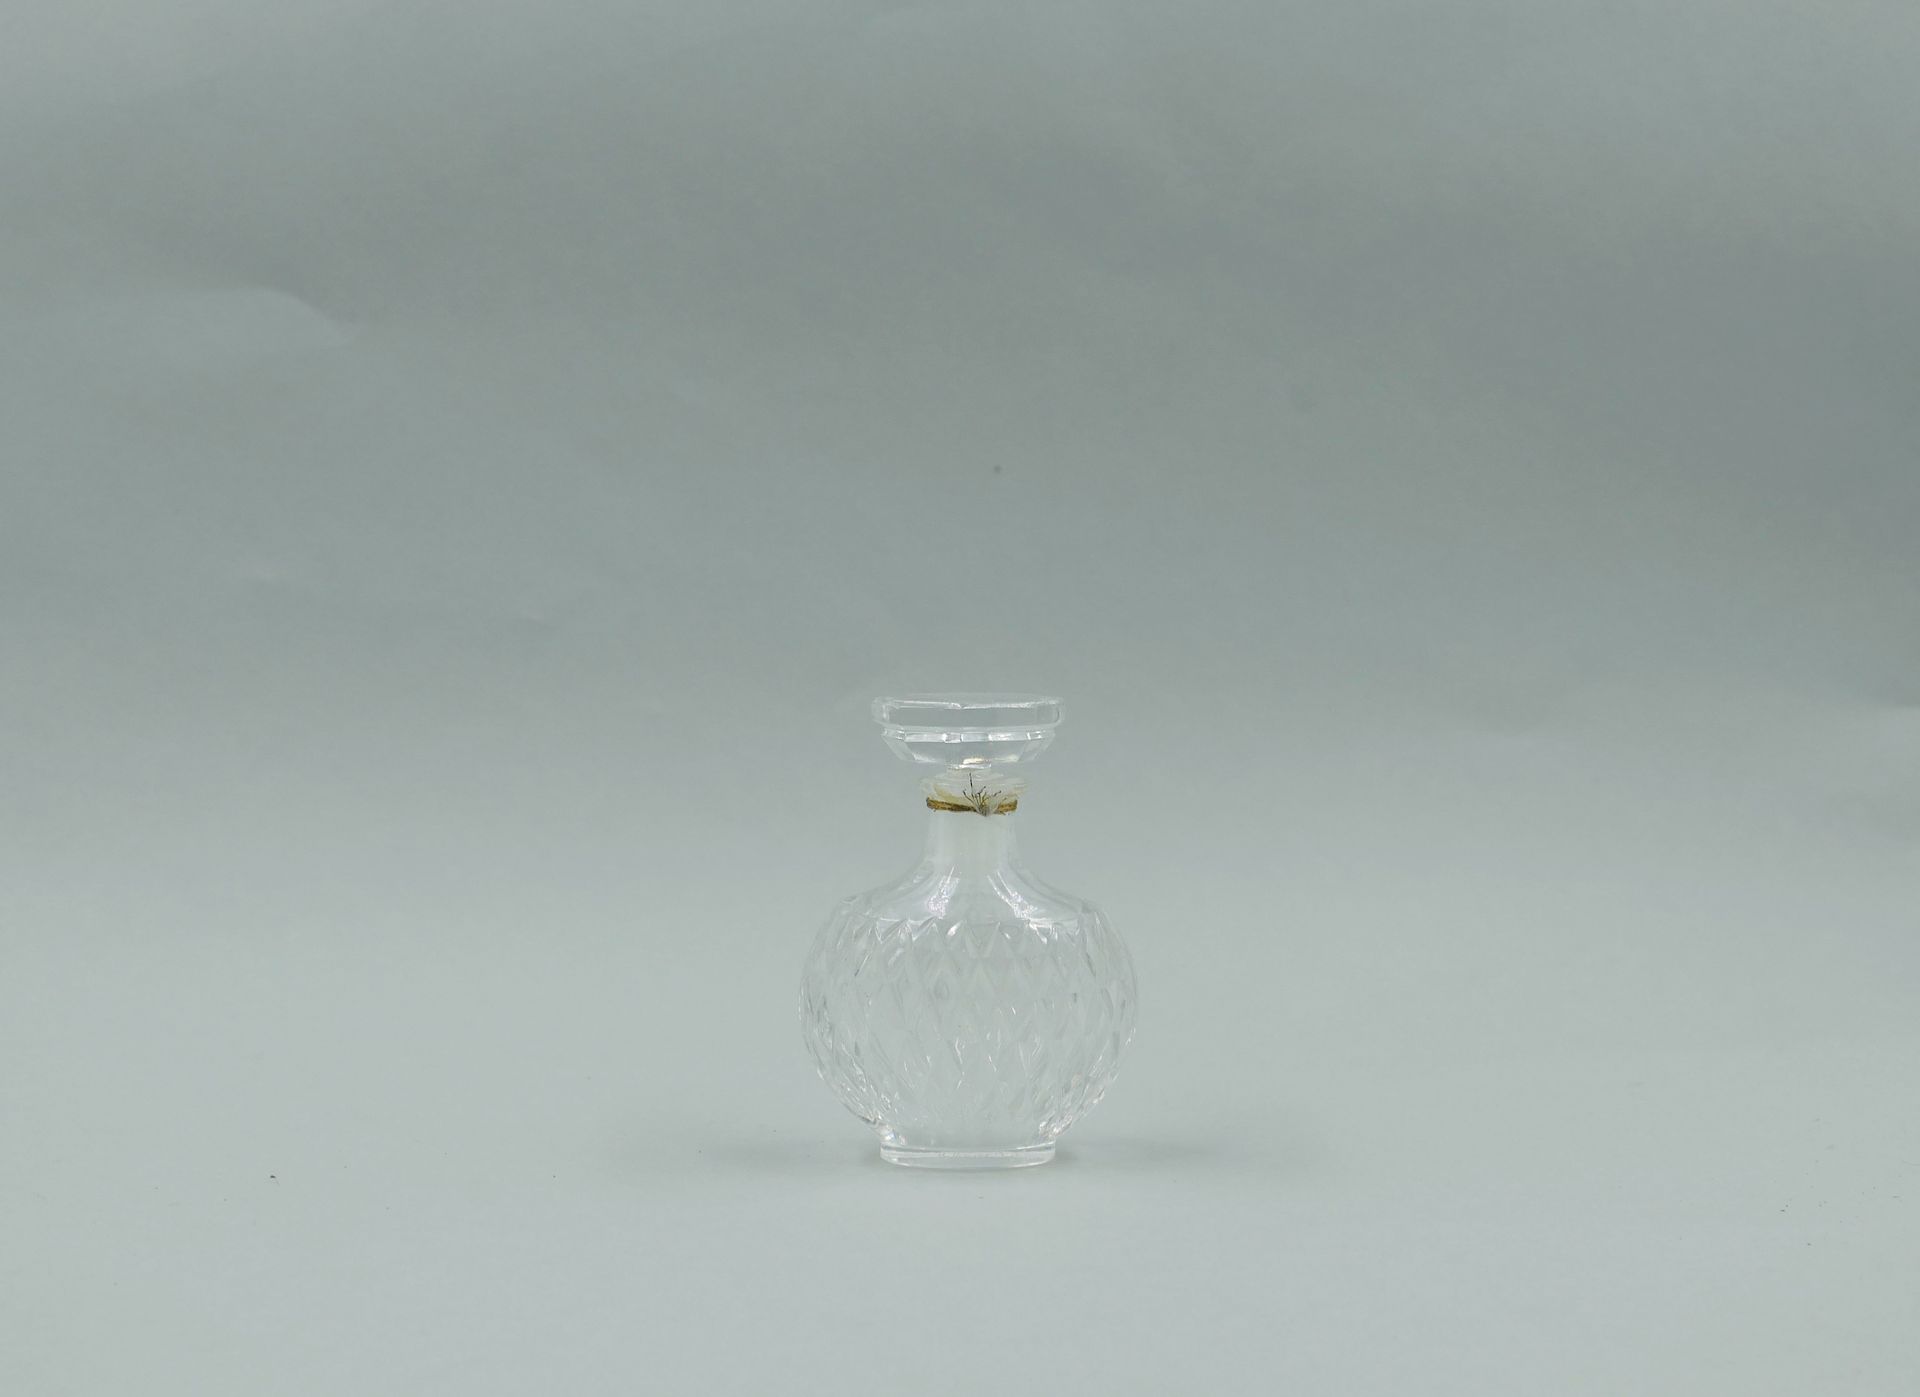 Null Nina RICCI和LALIQUE代表 "Capricci"。

透明水晶瓶，有浮雕的菱形装饰，六角形瓶塞。

署名为法国莱利克。

高度：8厘米